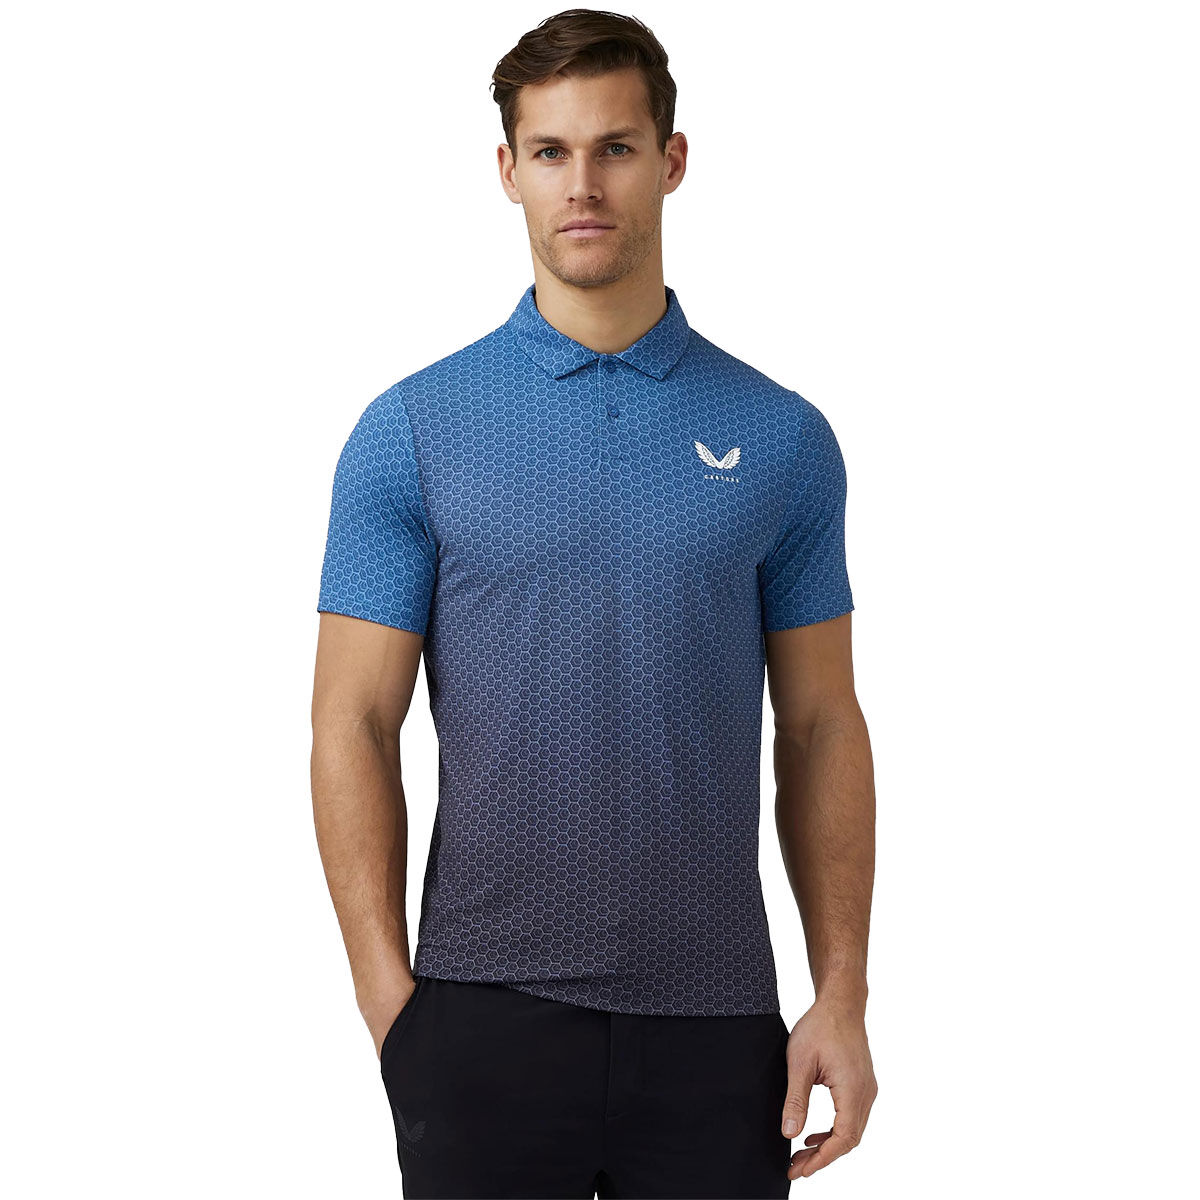 Castore Men's Printed 2 Golf Polo Shirt, Mens, Royal blue, Large | American Golf von Castore